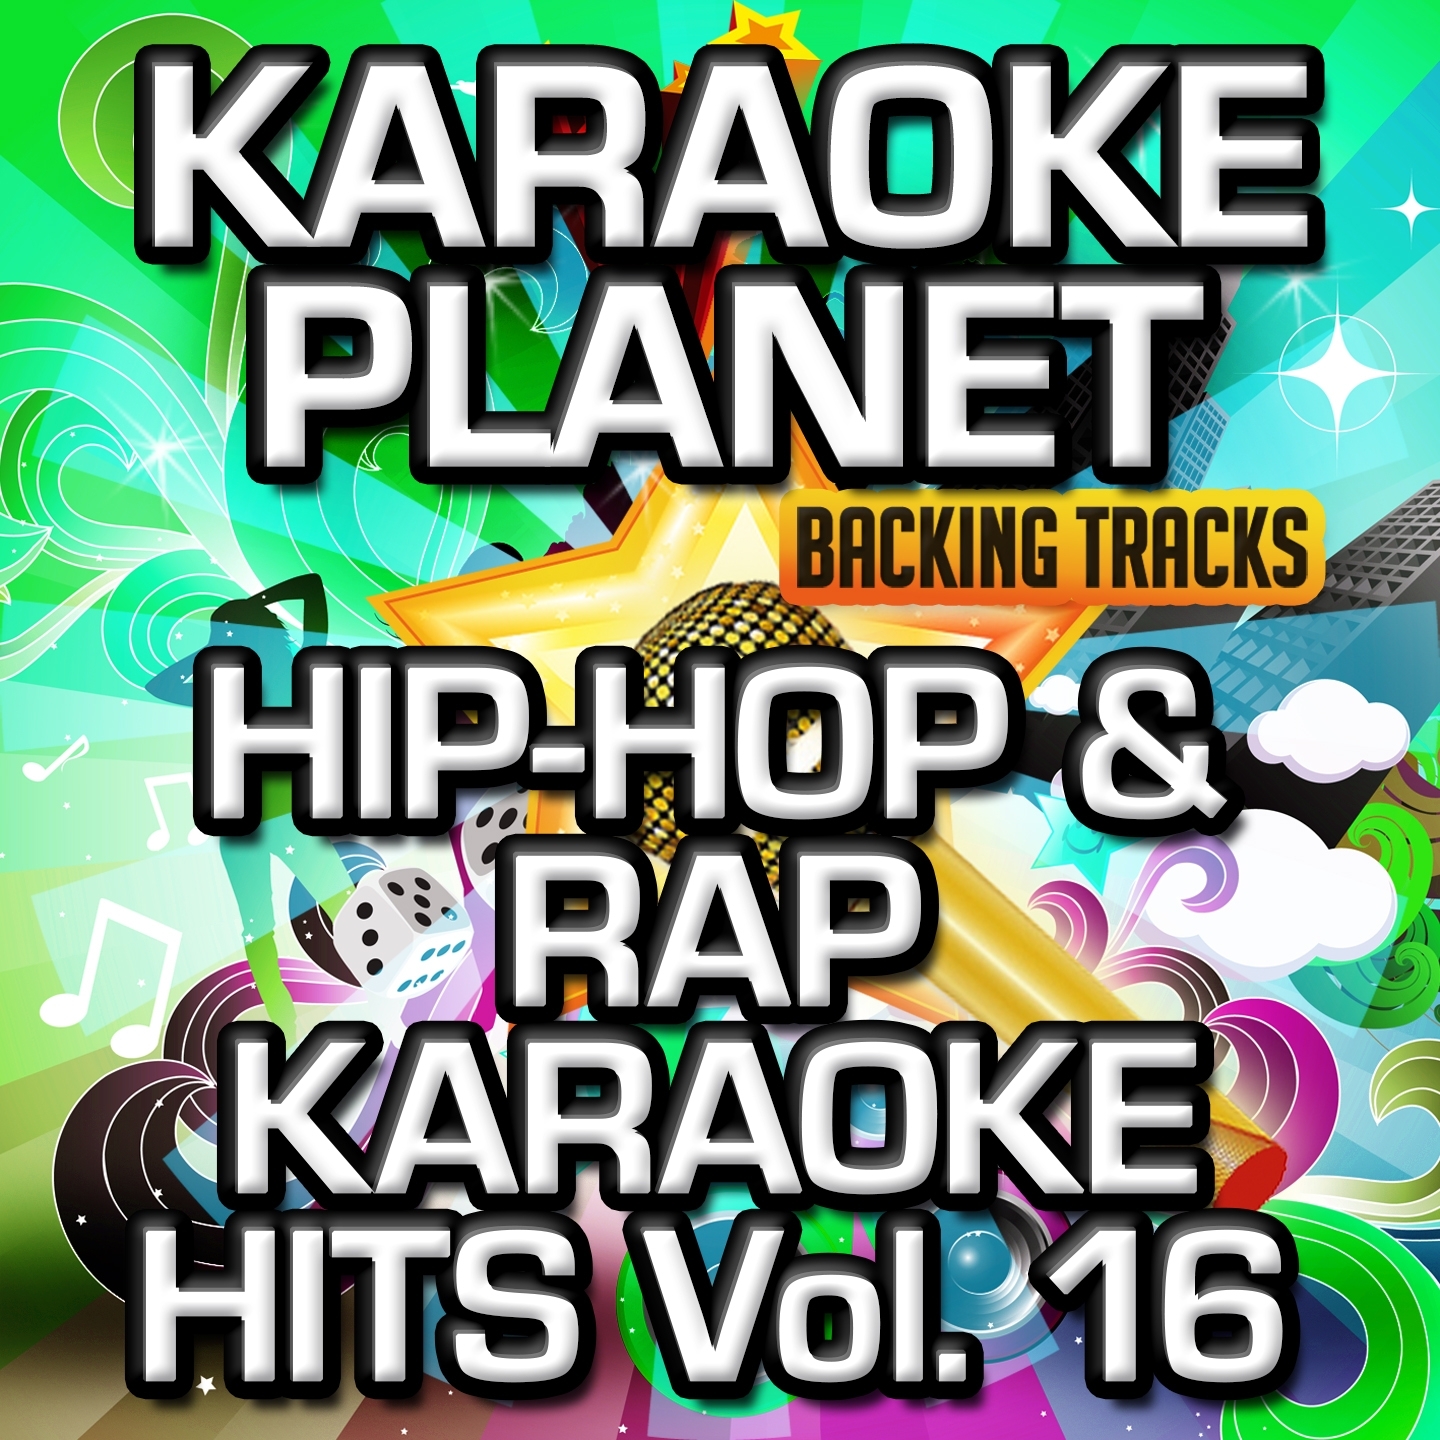 Hip-Hop & Rap Karaoke Hits, Vol. 16